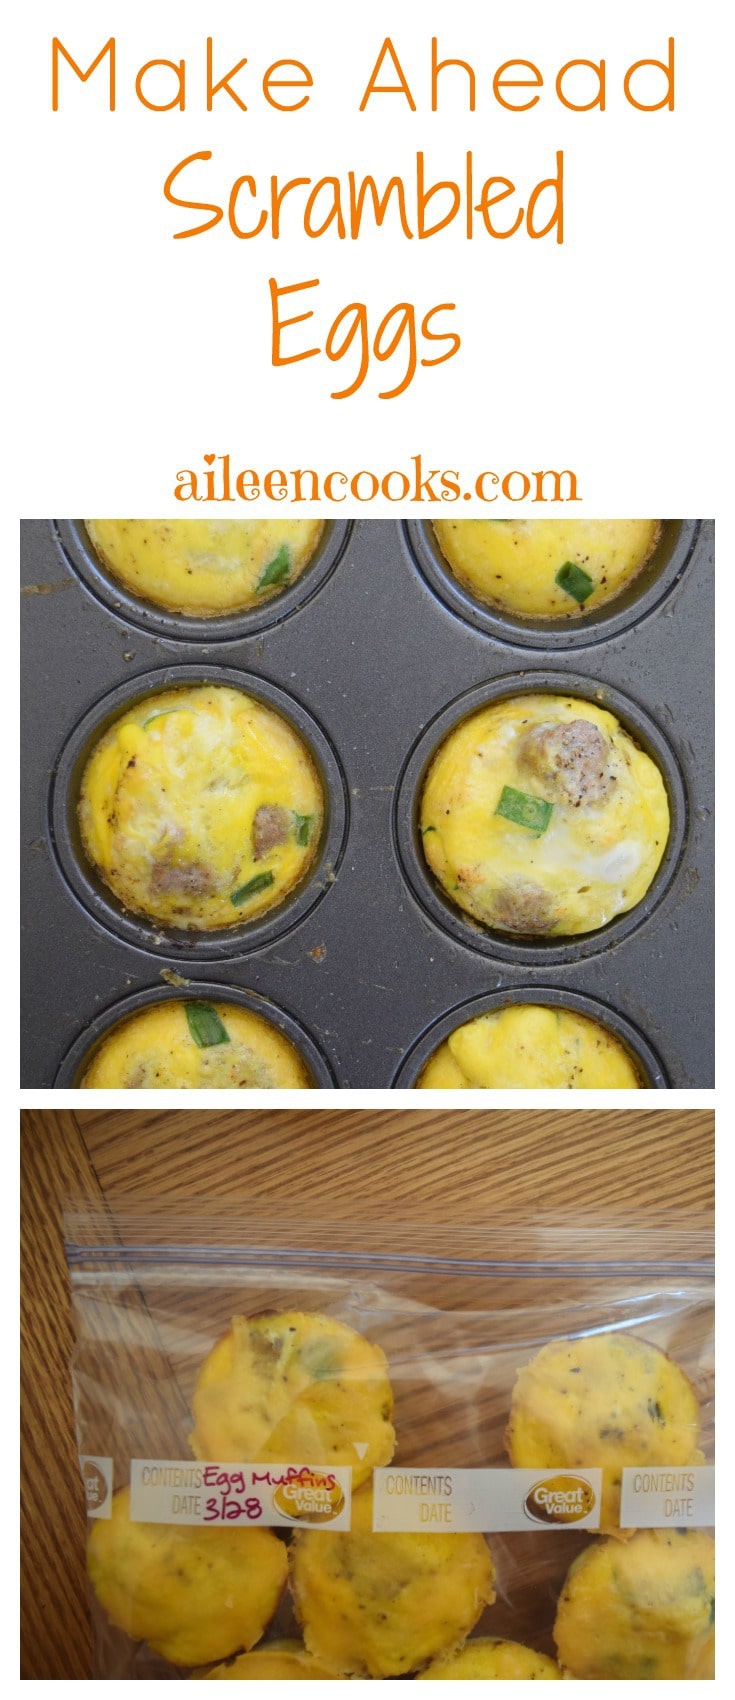 Make Ahead Scrambled Eggs for the Freezer - Aileen Cooks